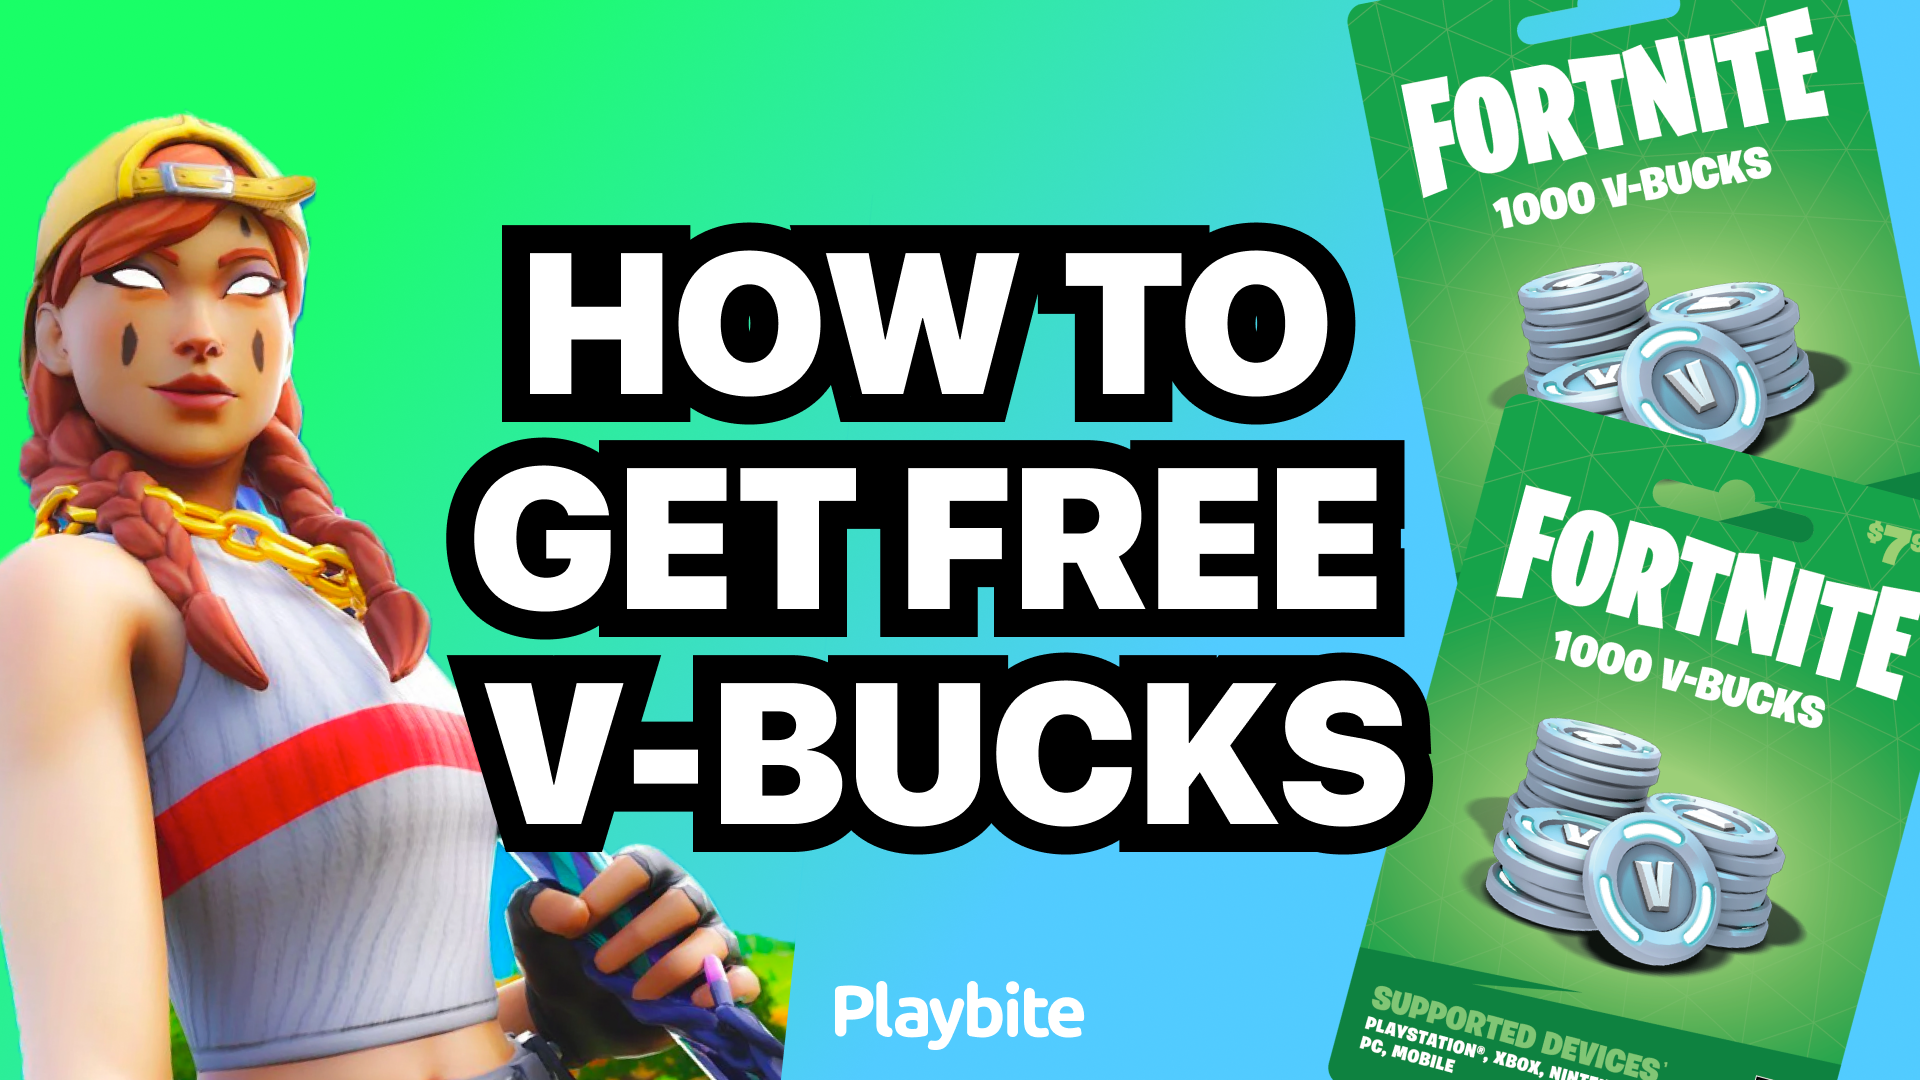 Fortnite: Free V-Bucks are too good to be true